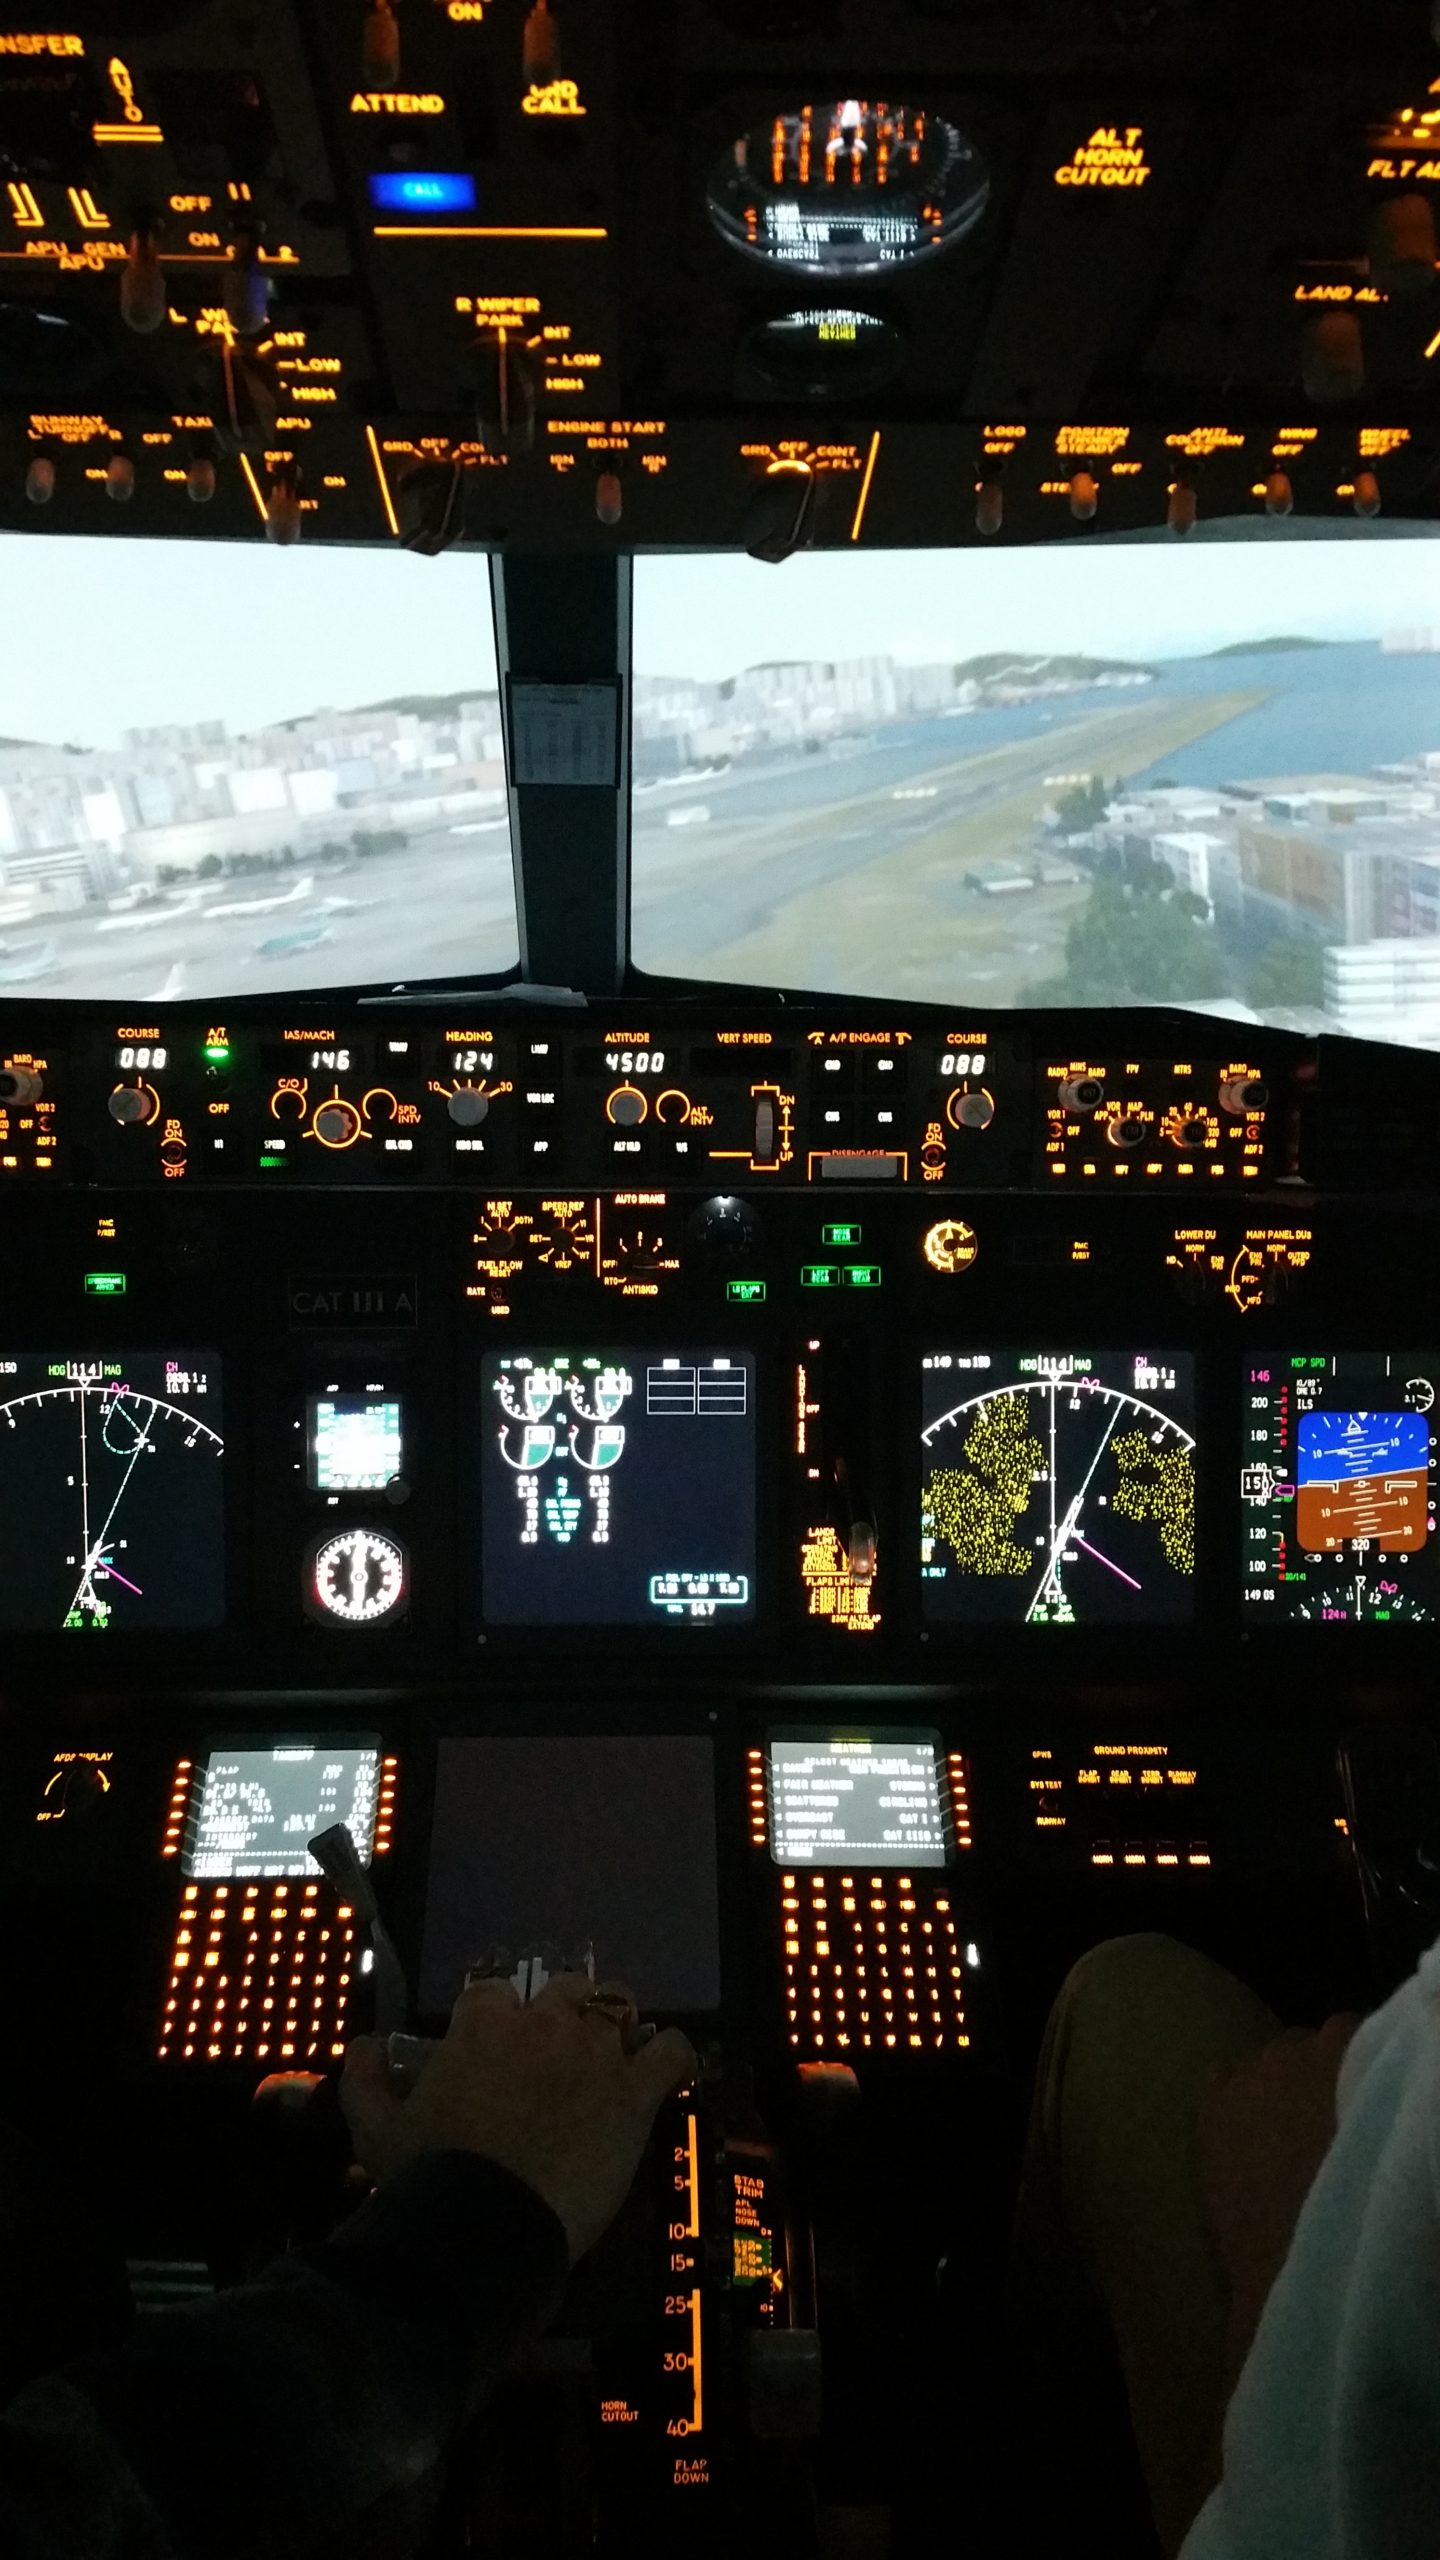 instal the new version for windows Extreme Plane Stunts Simulator